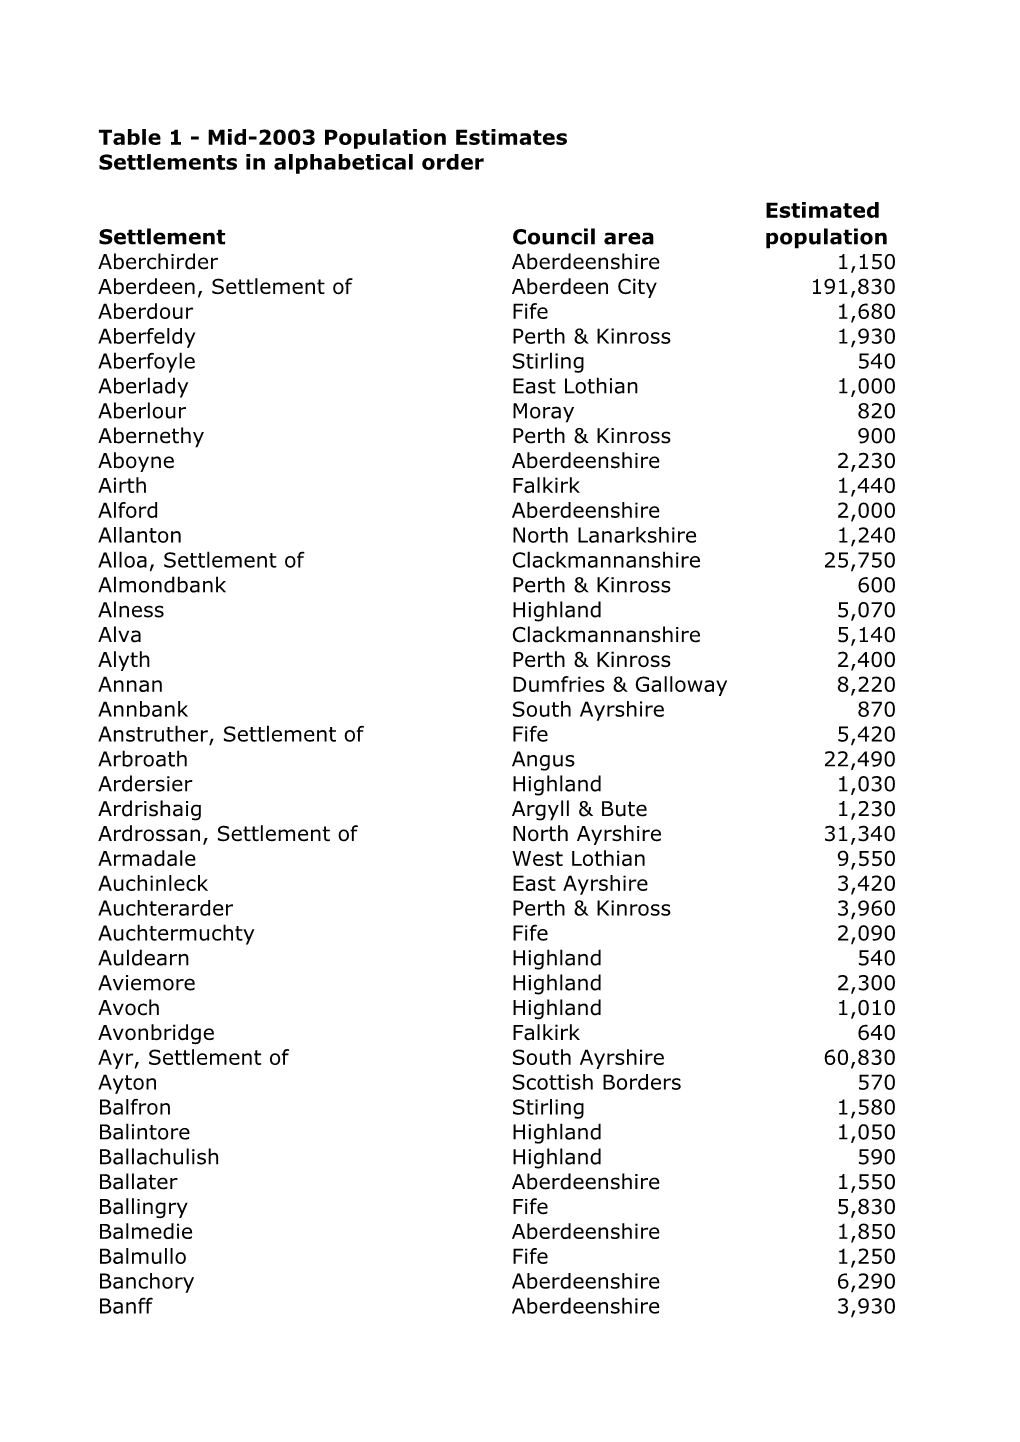 Mid-2003 Population Estimates Settlements in Alphabetical Order